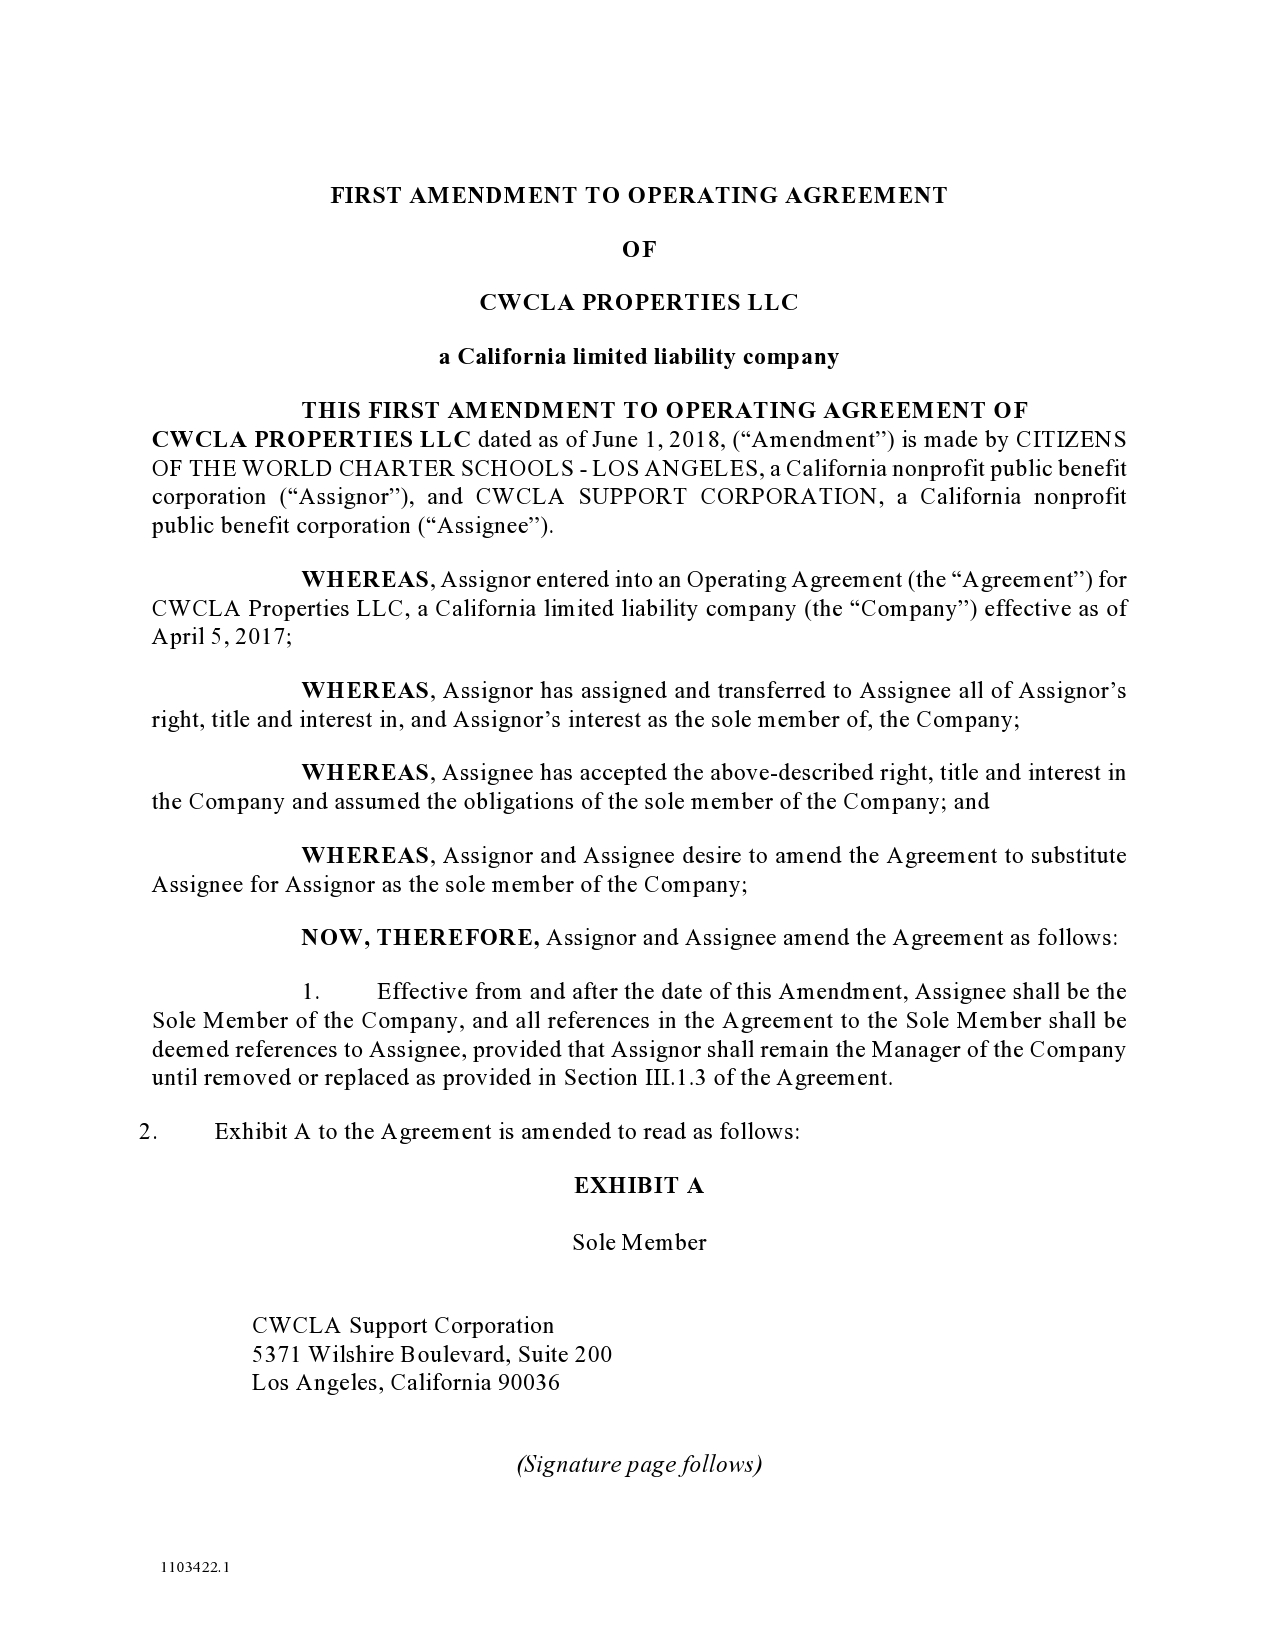 Free operating agreement amendment 34